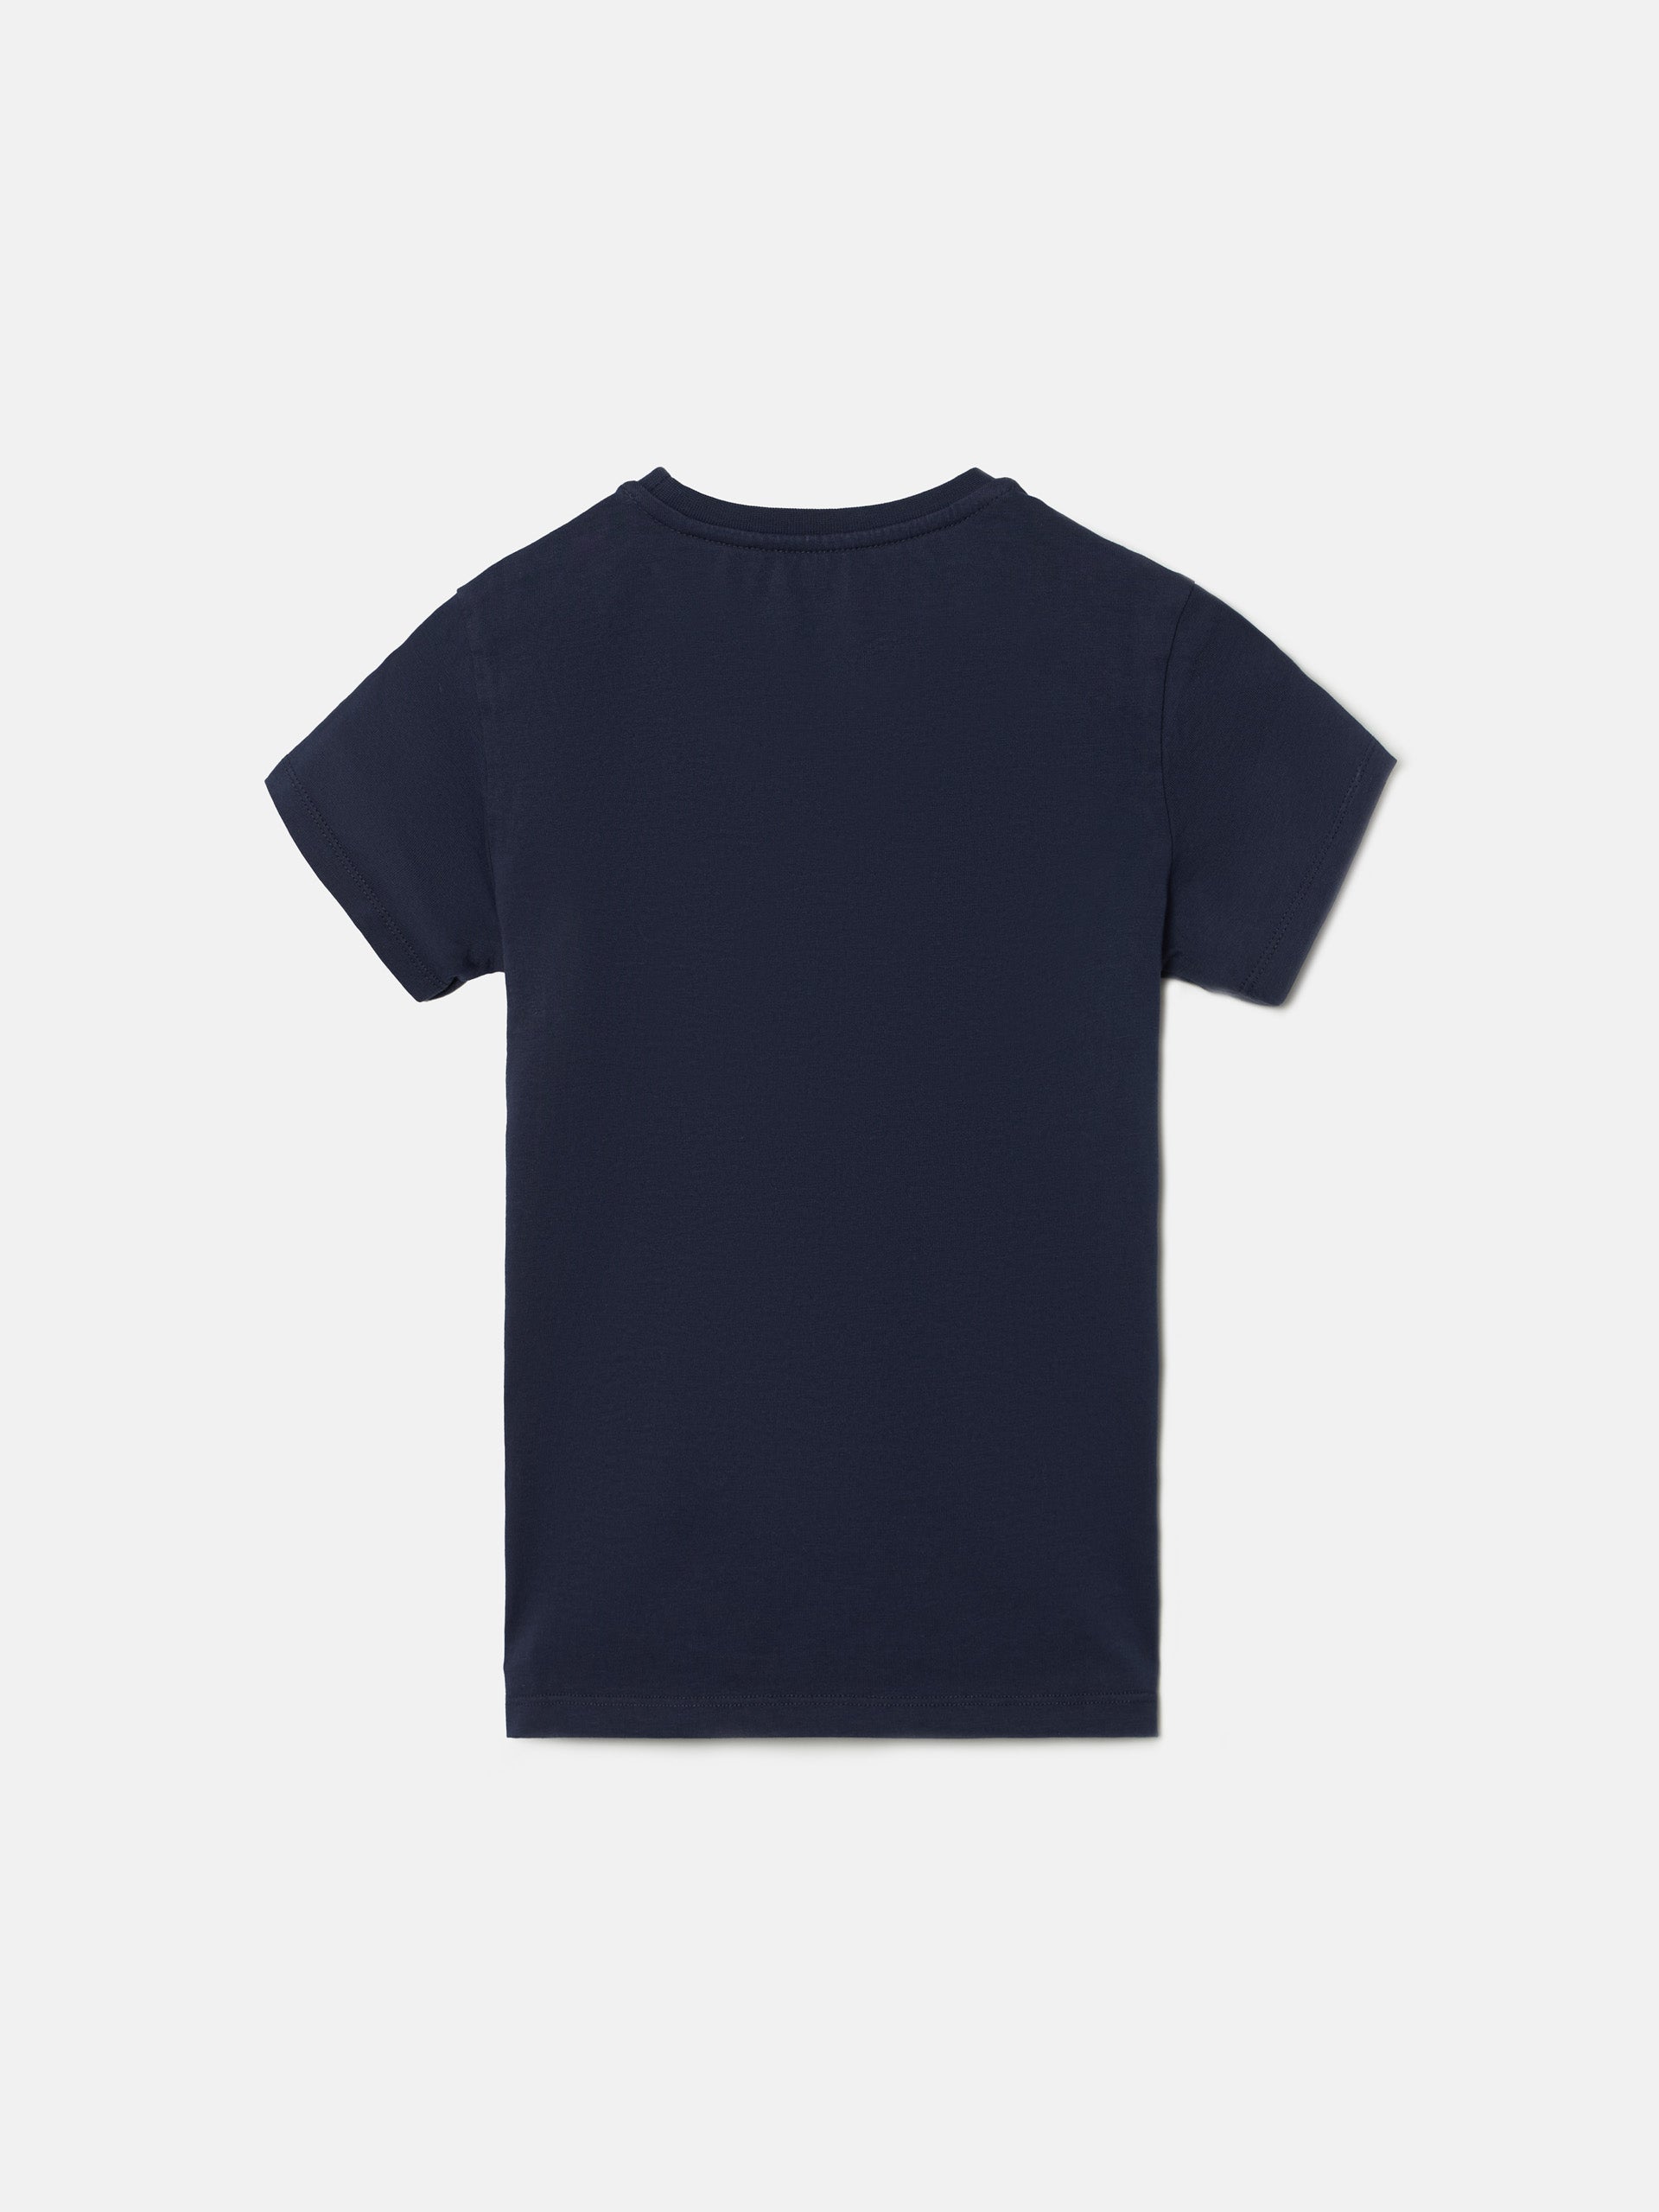 Camiseta kids raqueta media azul marino